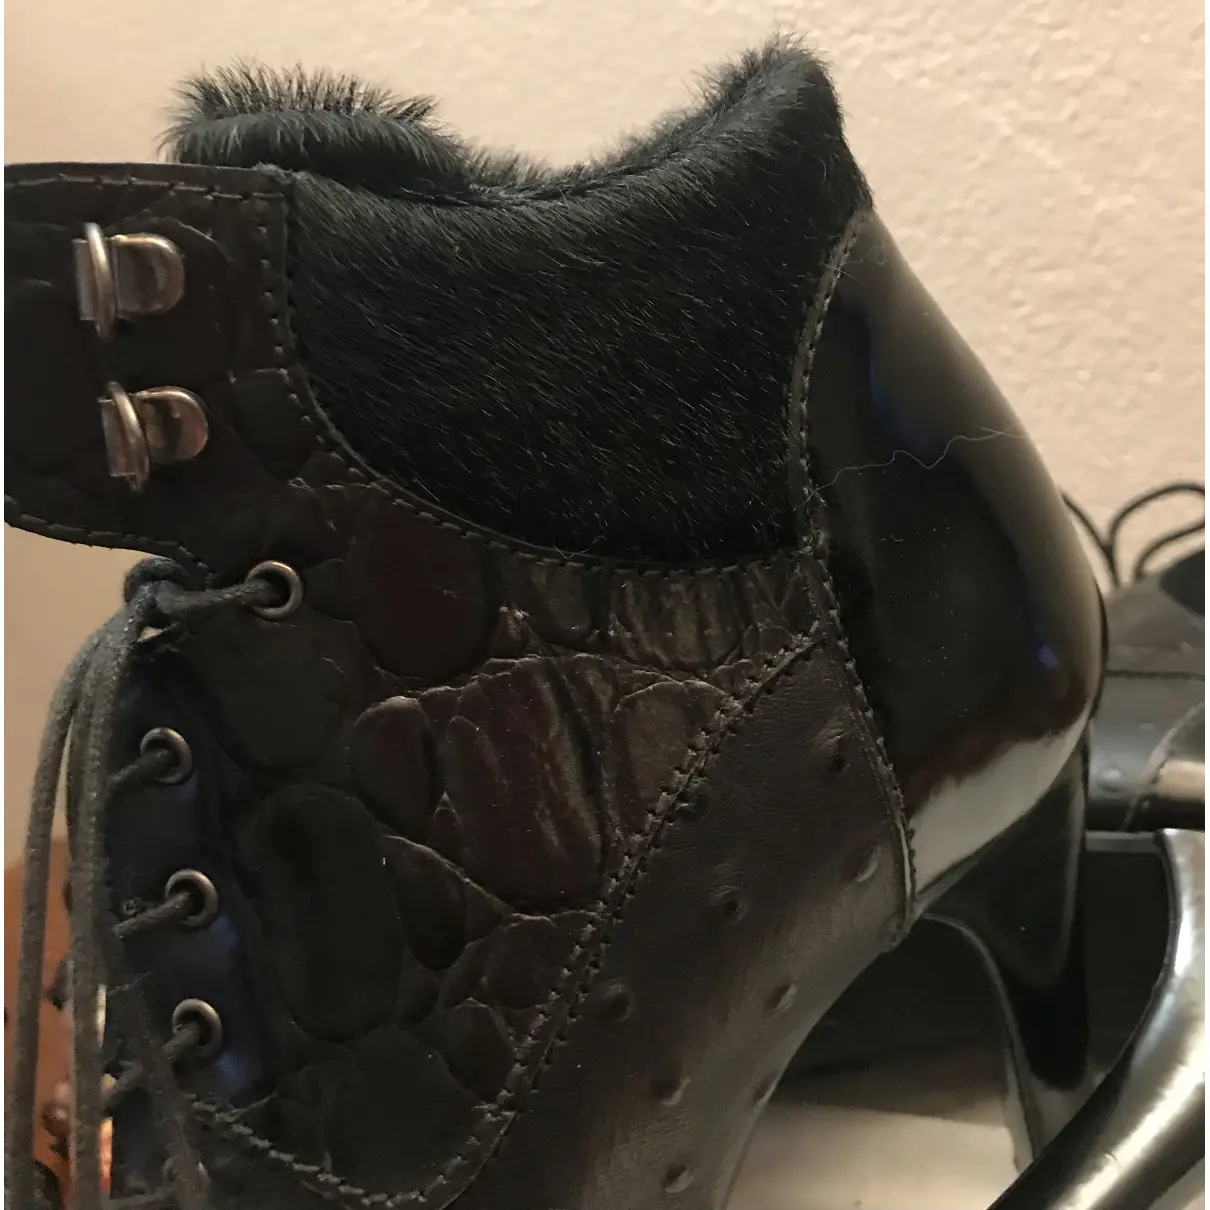 Buy Stuart Weitzman Leather lace up boots online